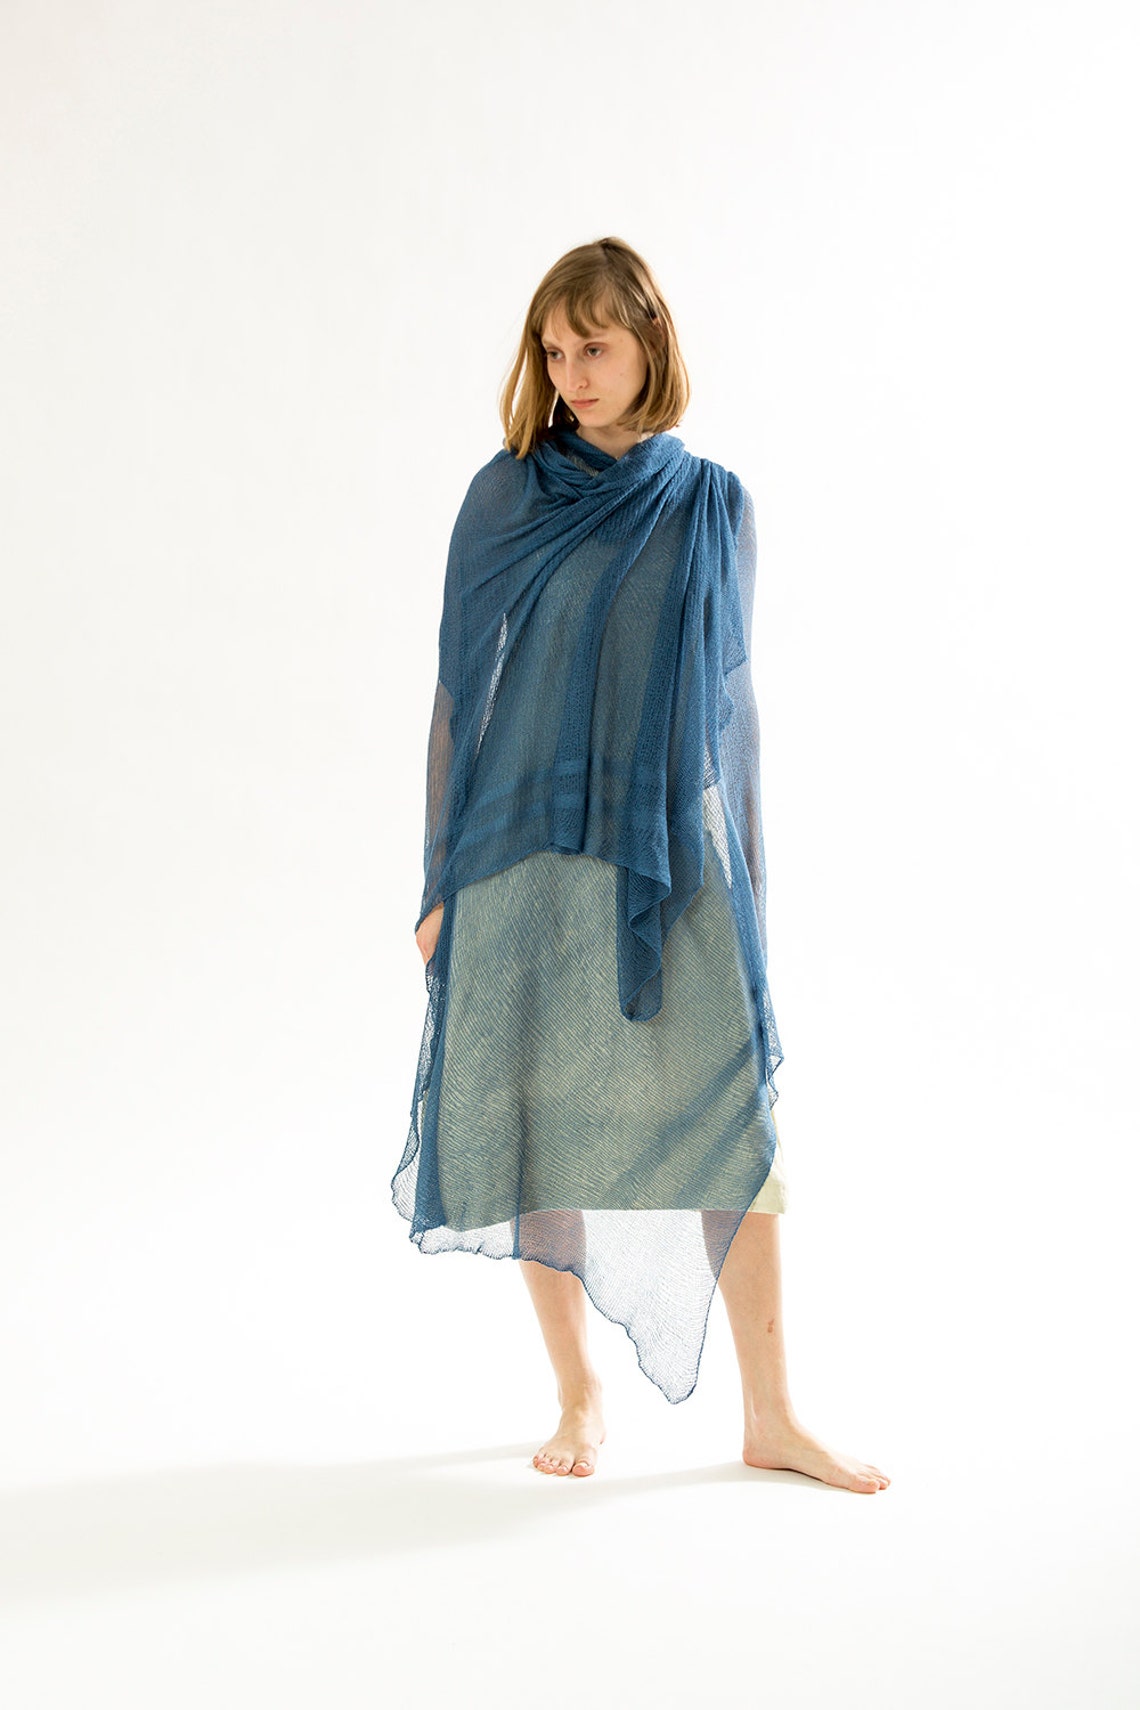 Blue Women Knitted Scarflight Blue Big Sheer Bamboo Silk | Etsy